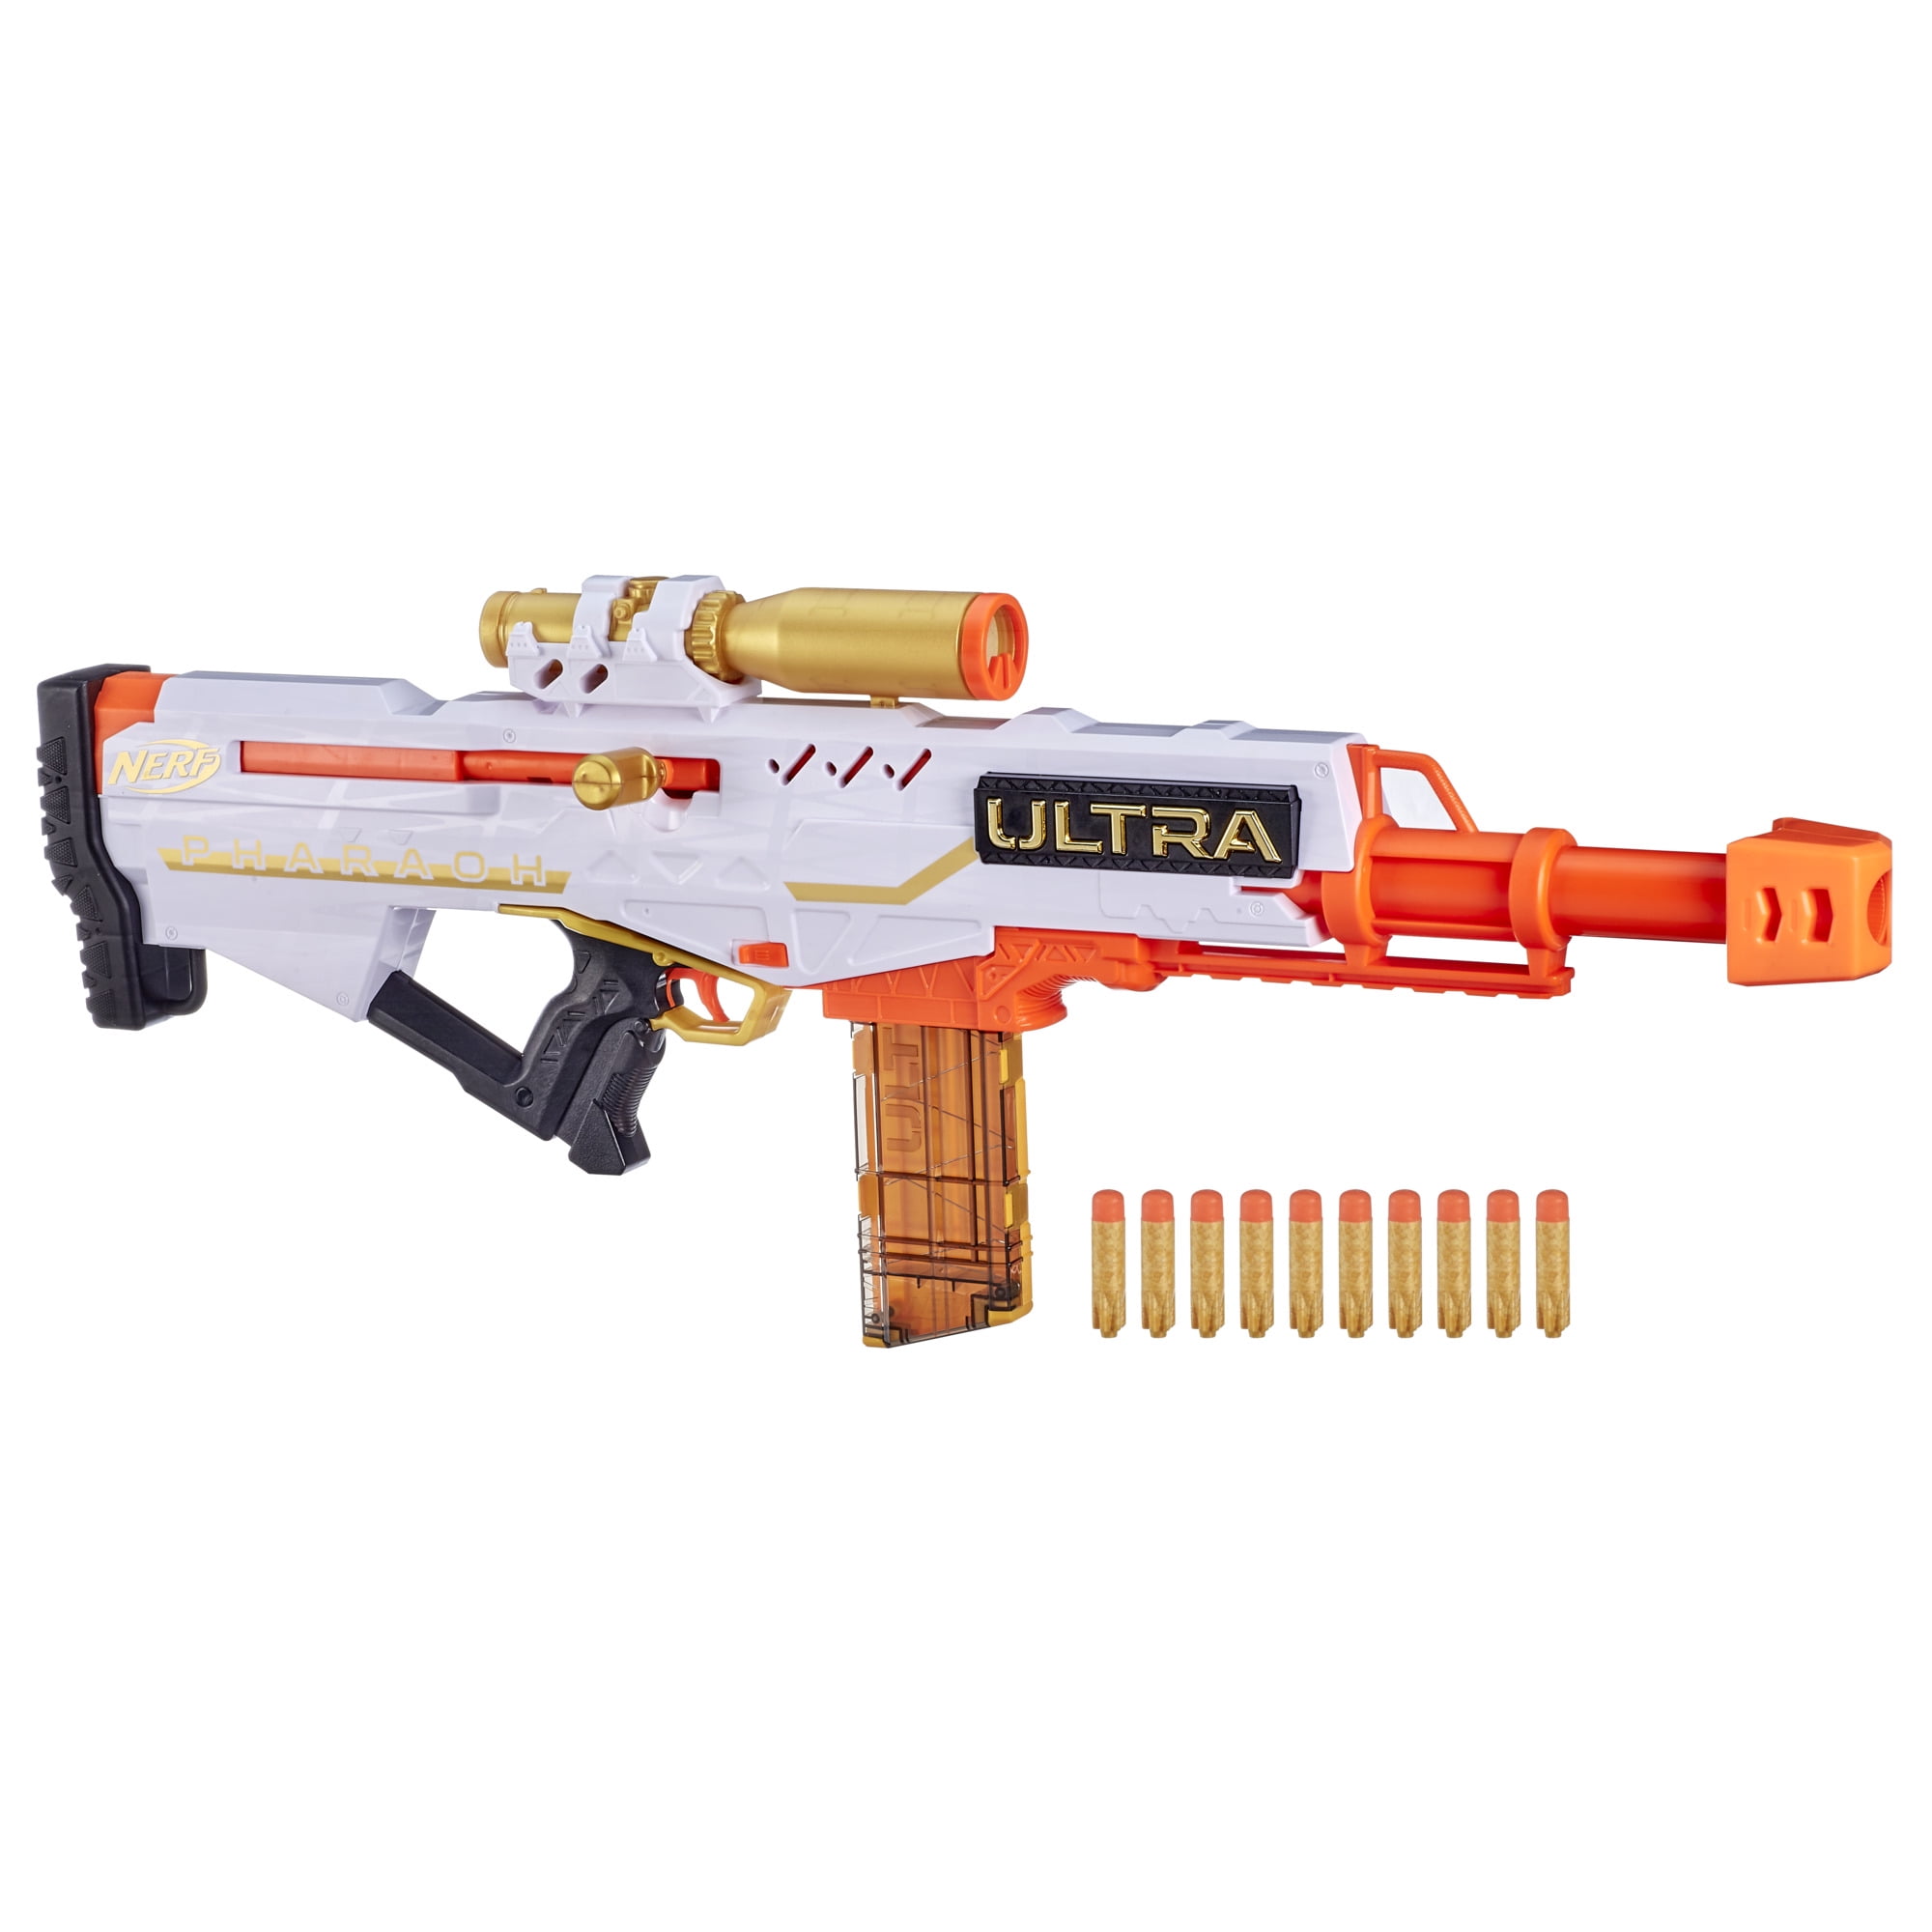 New Nerf Gun Ultra Pharaoh Bolt Action Sniper Rifle Boy's Toy Gun Gift Blaster